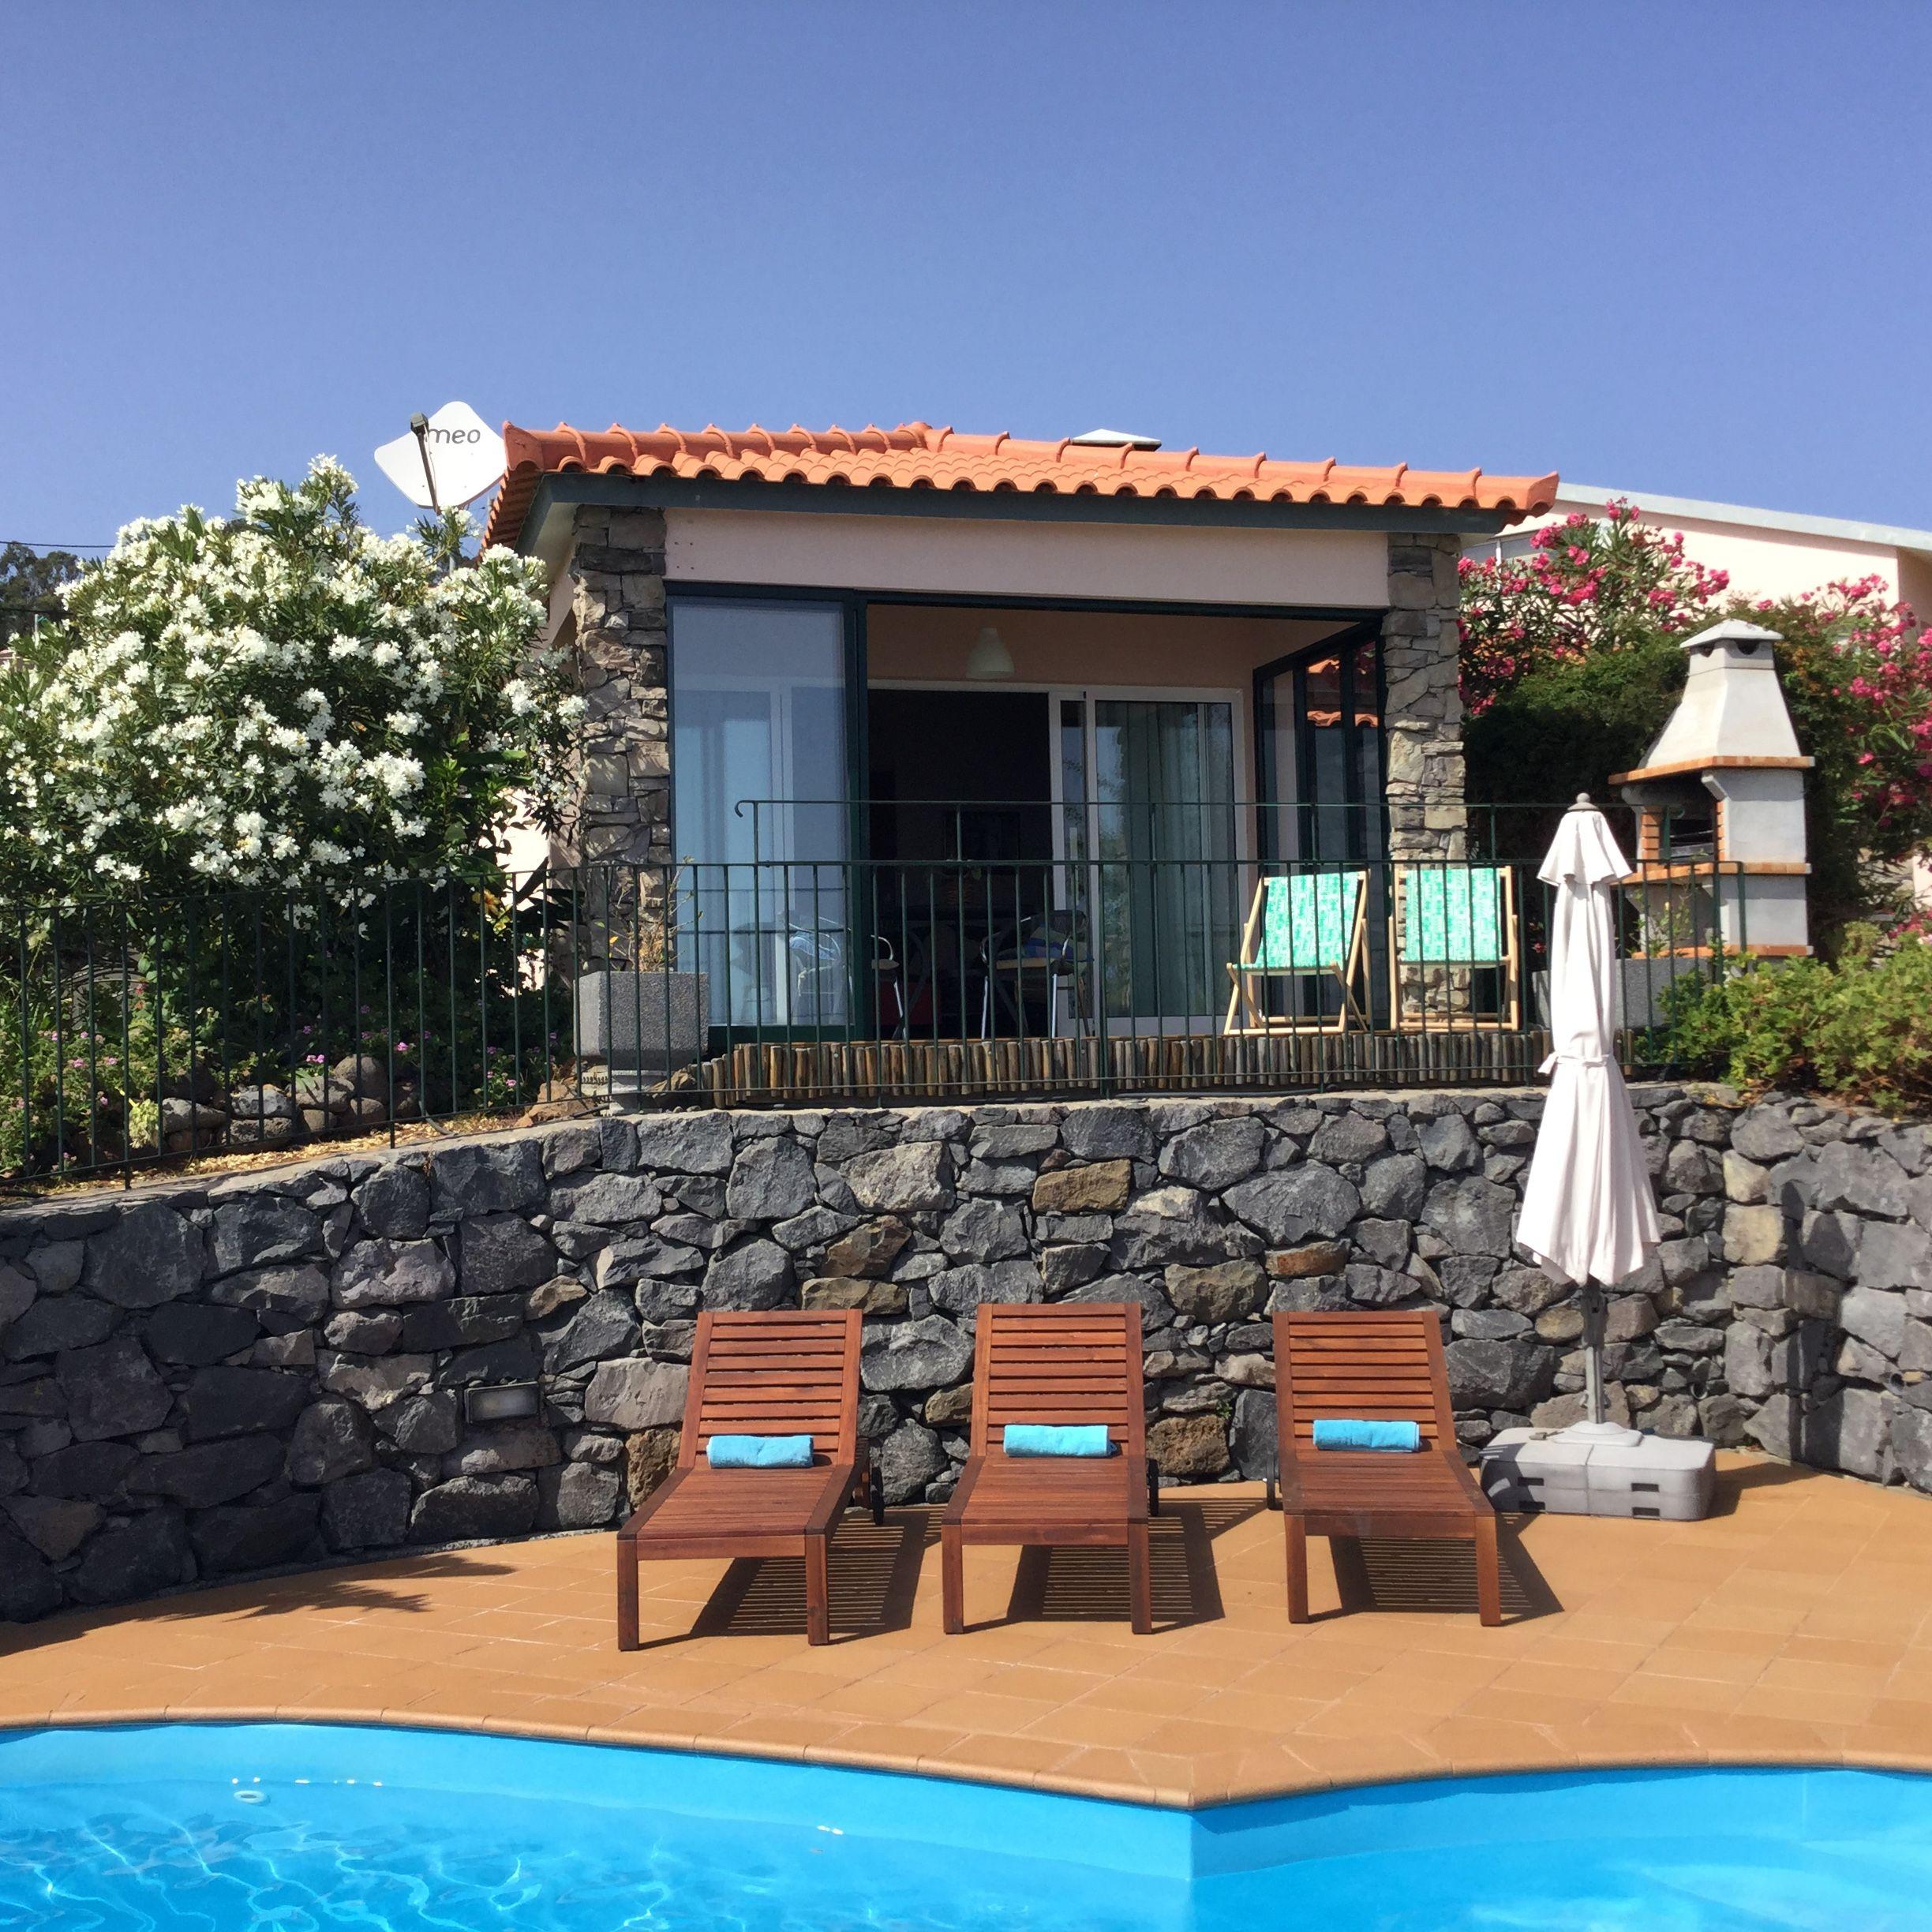 Ferienhaus für 2 Personen ca. 55 m² in E Ferienhaus in Portugal